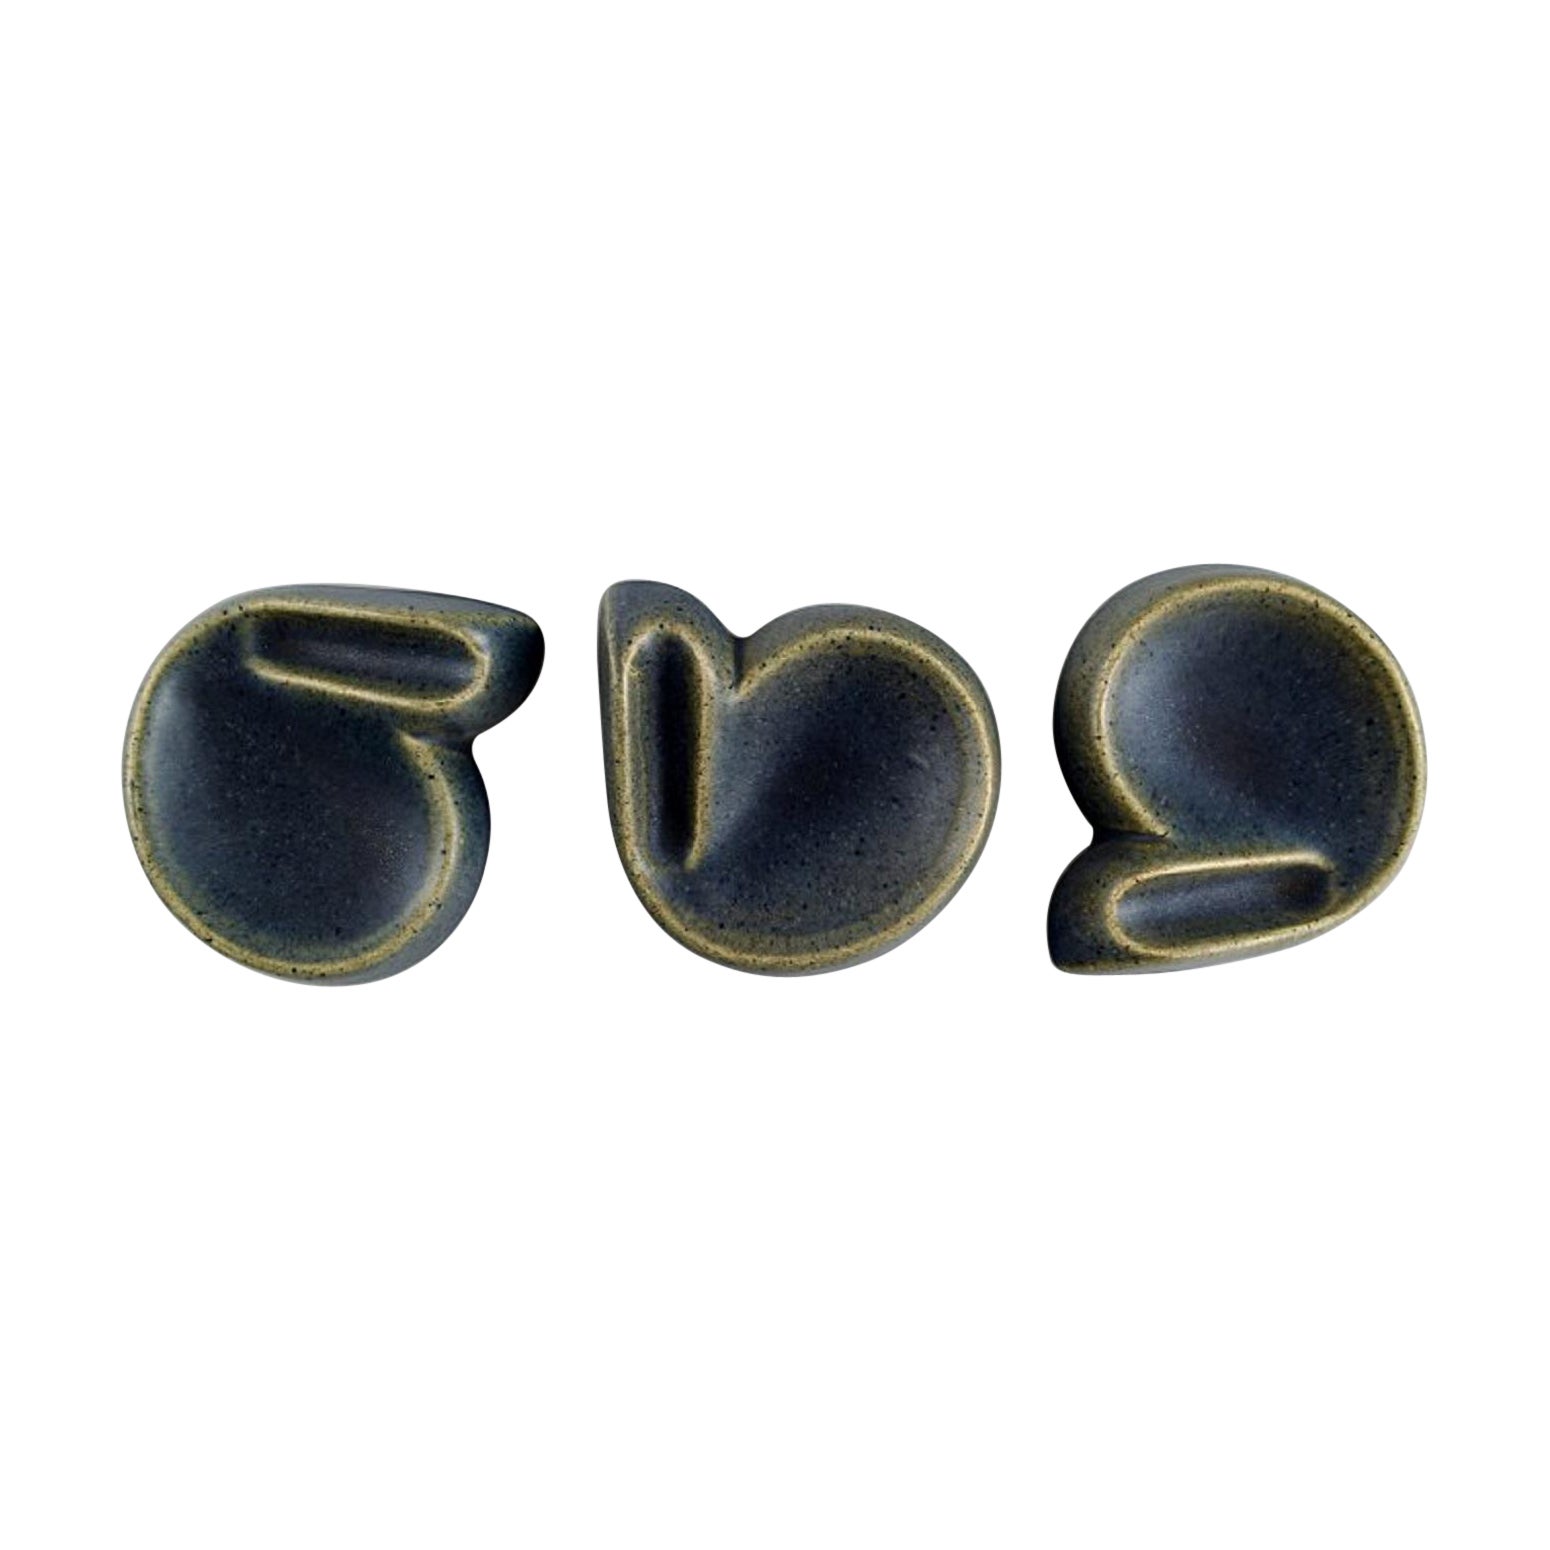 Syco, Sweden, Three Small Bowls in Glazed Stoneware, Mid-20th C